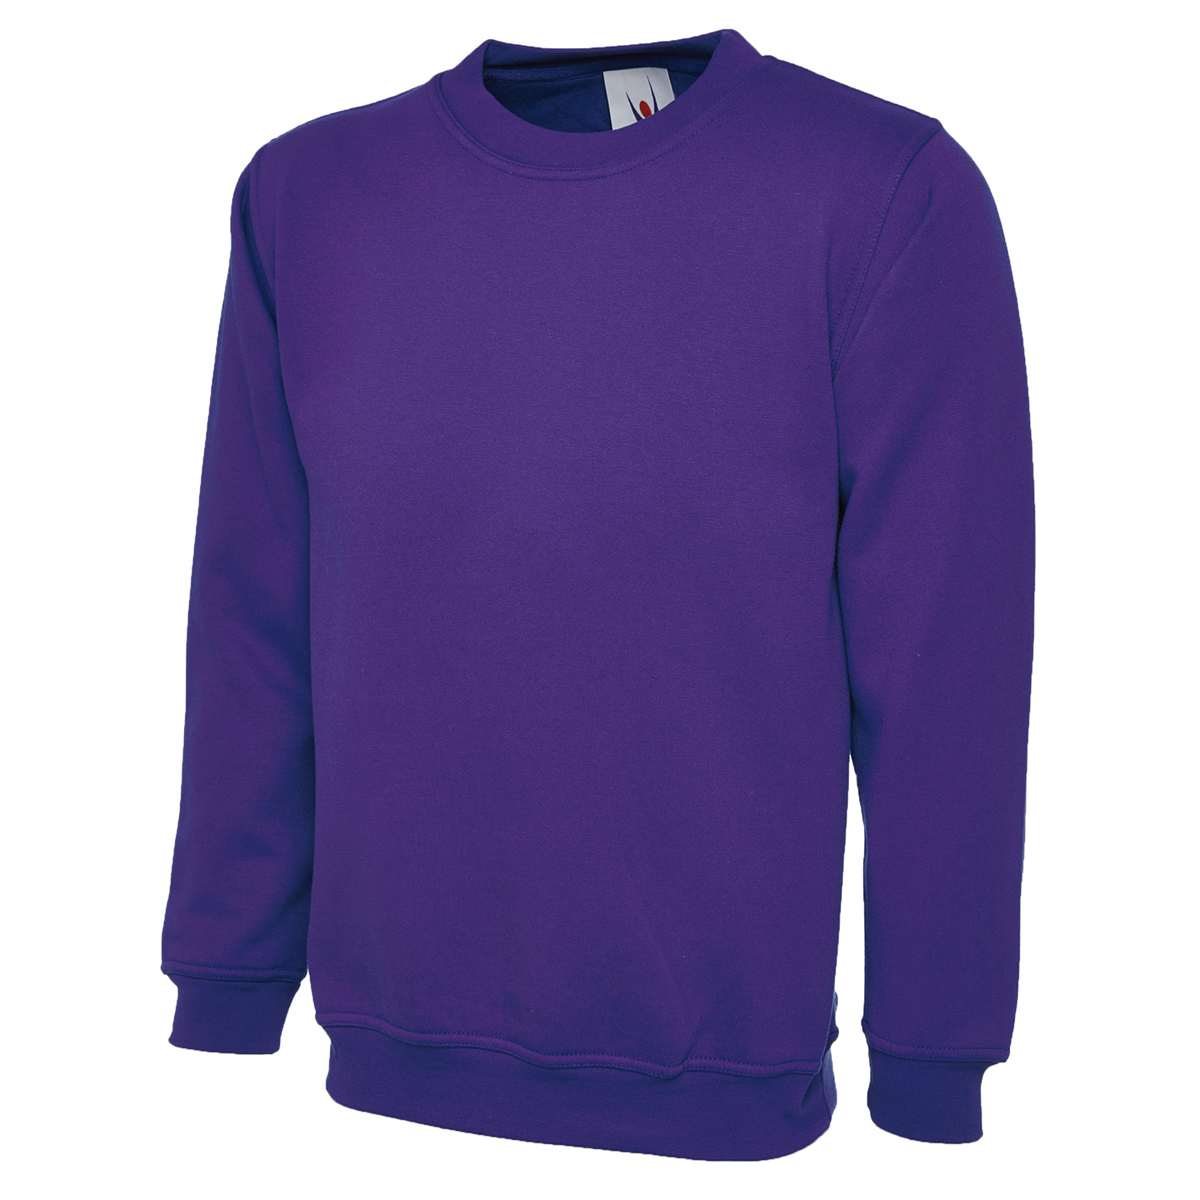 Uc203 300gsm classic sweatshirt - purple - large